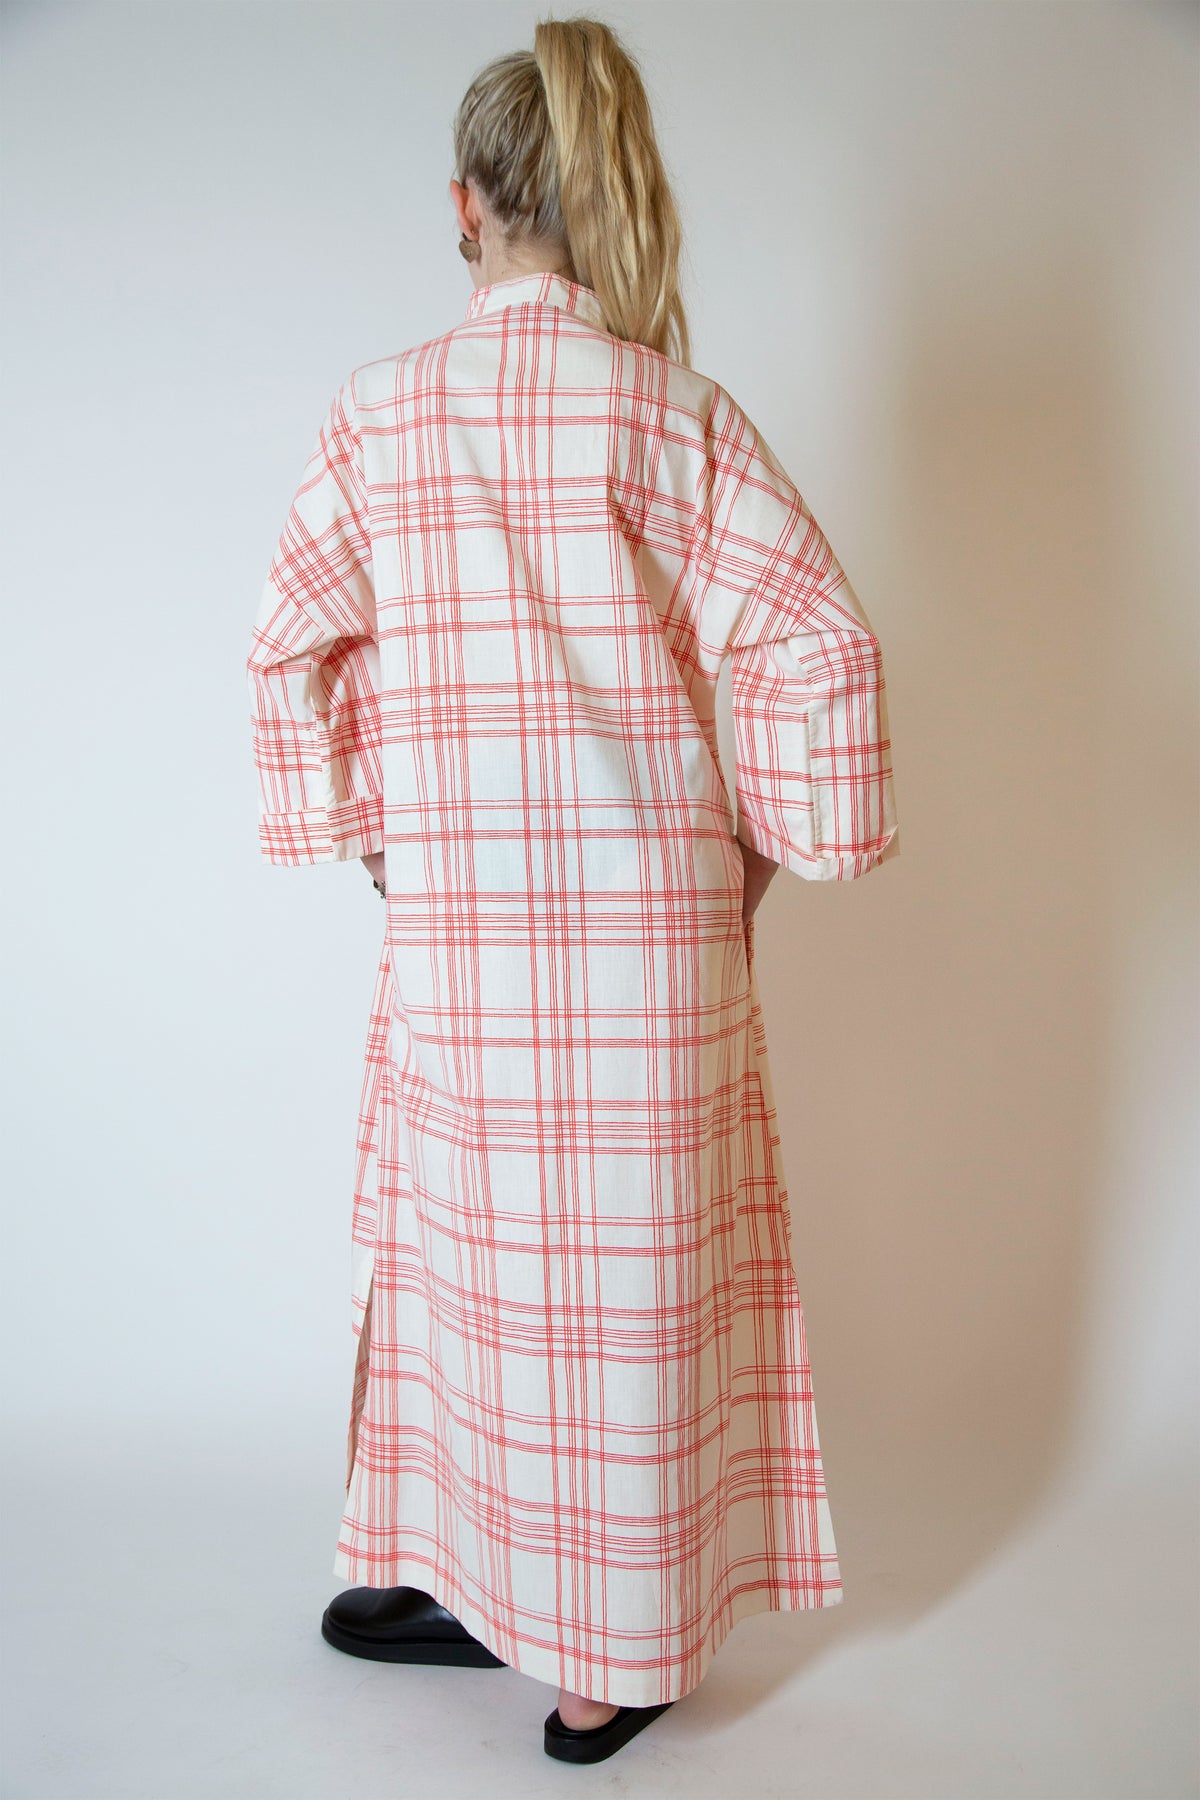 David Brown cotton caftan dress